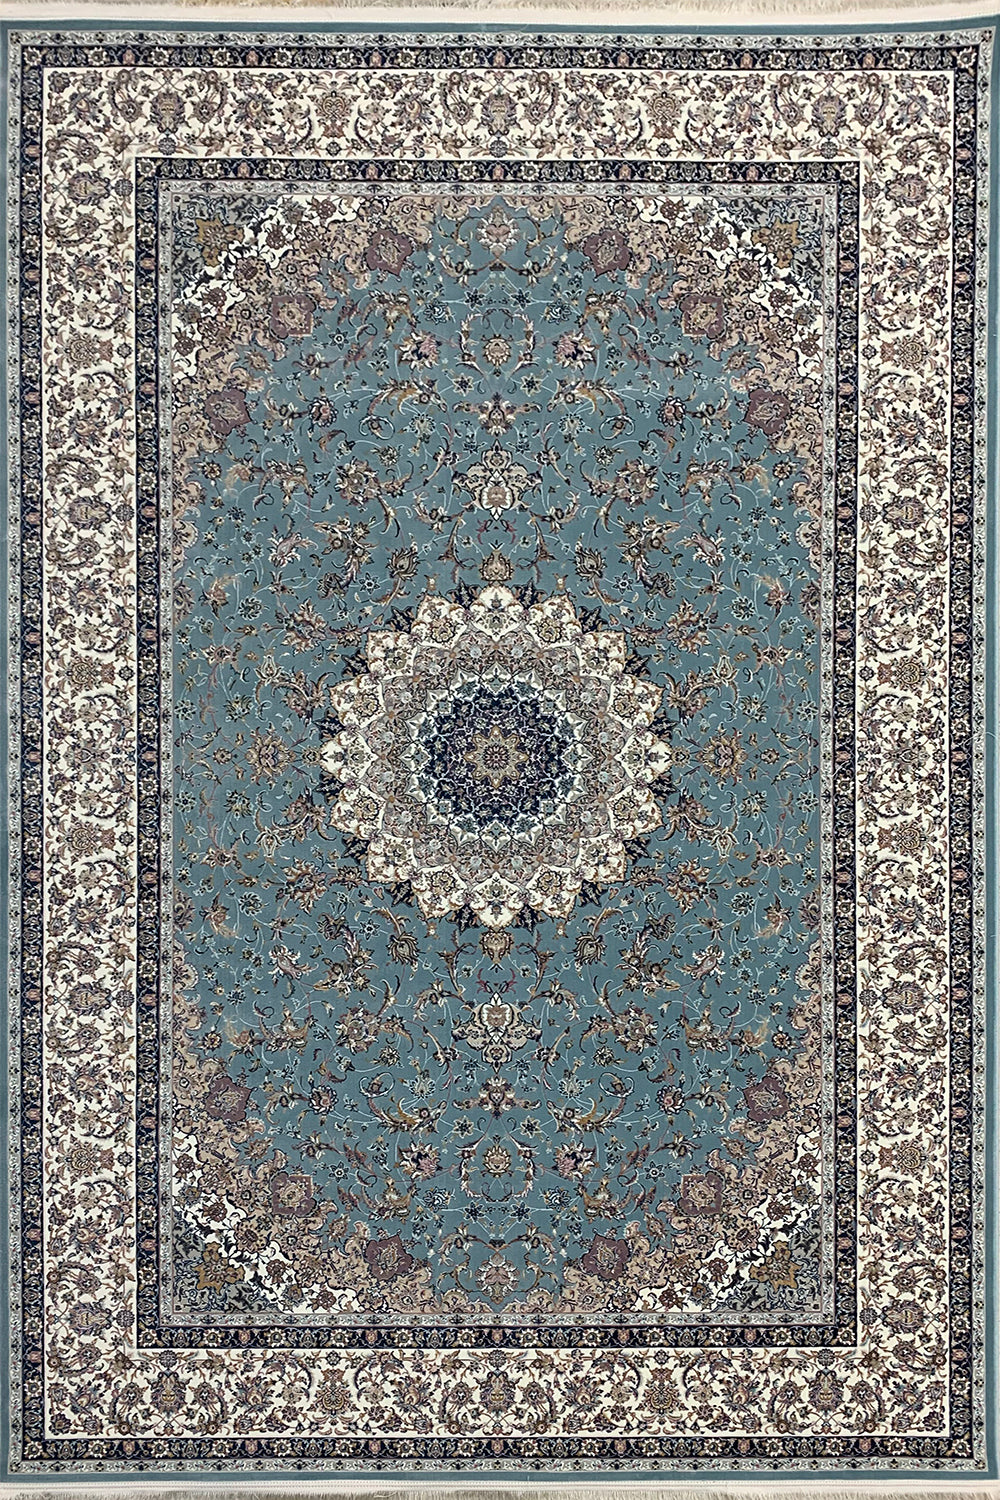 ISFAHAN BLUE (1250 REED)